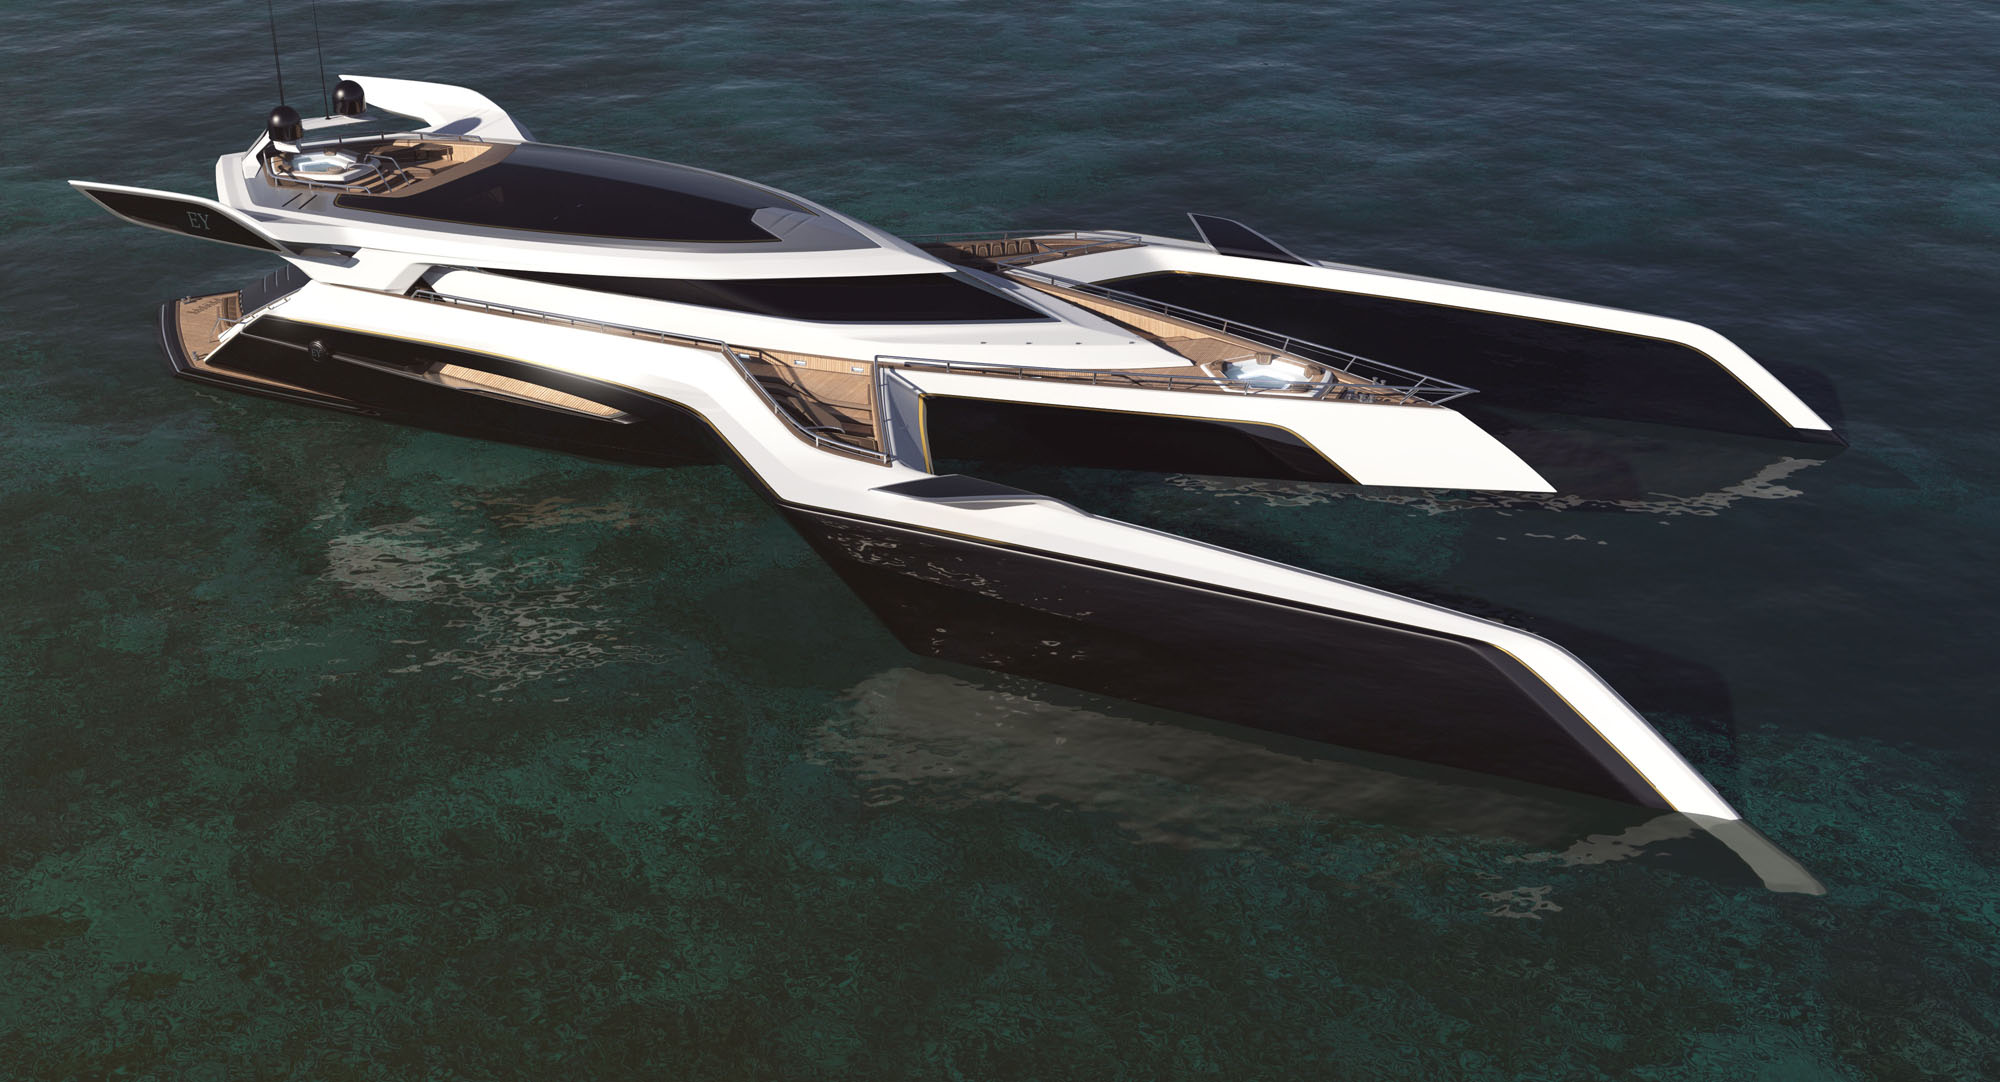 Trimaran yacht design